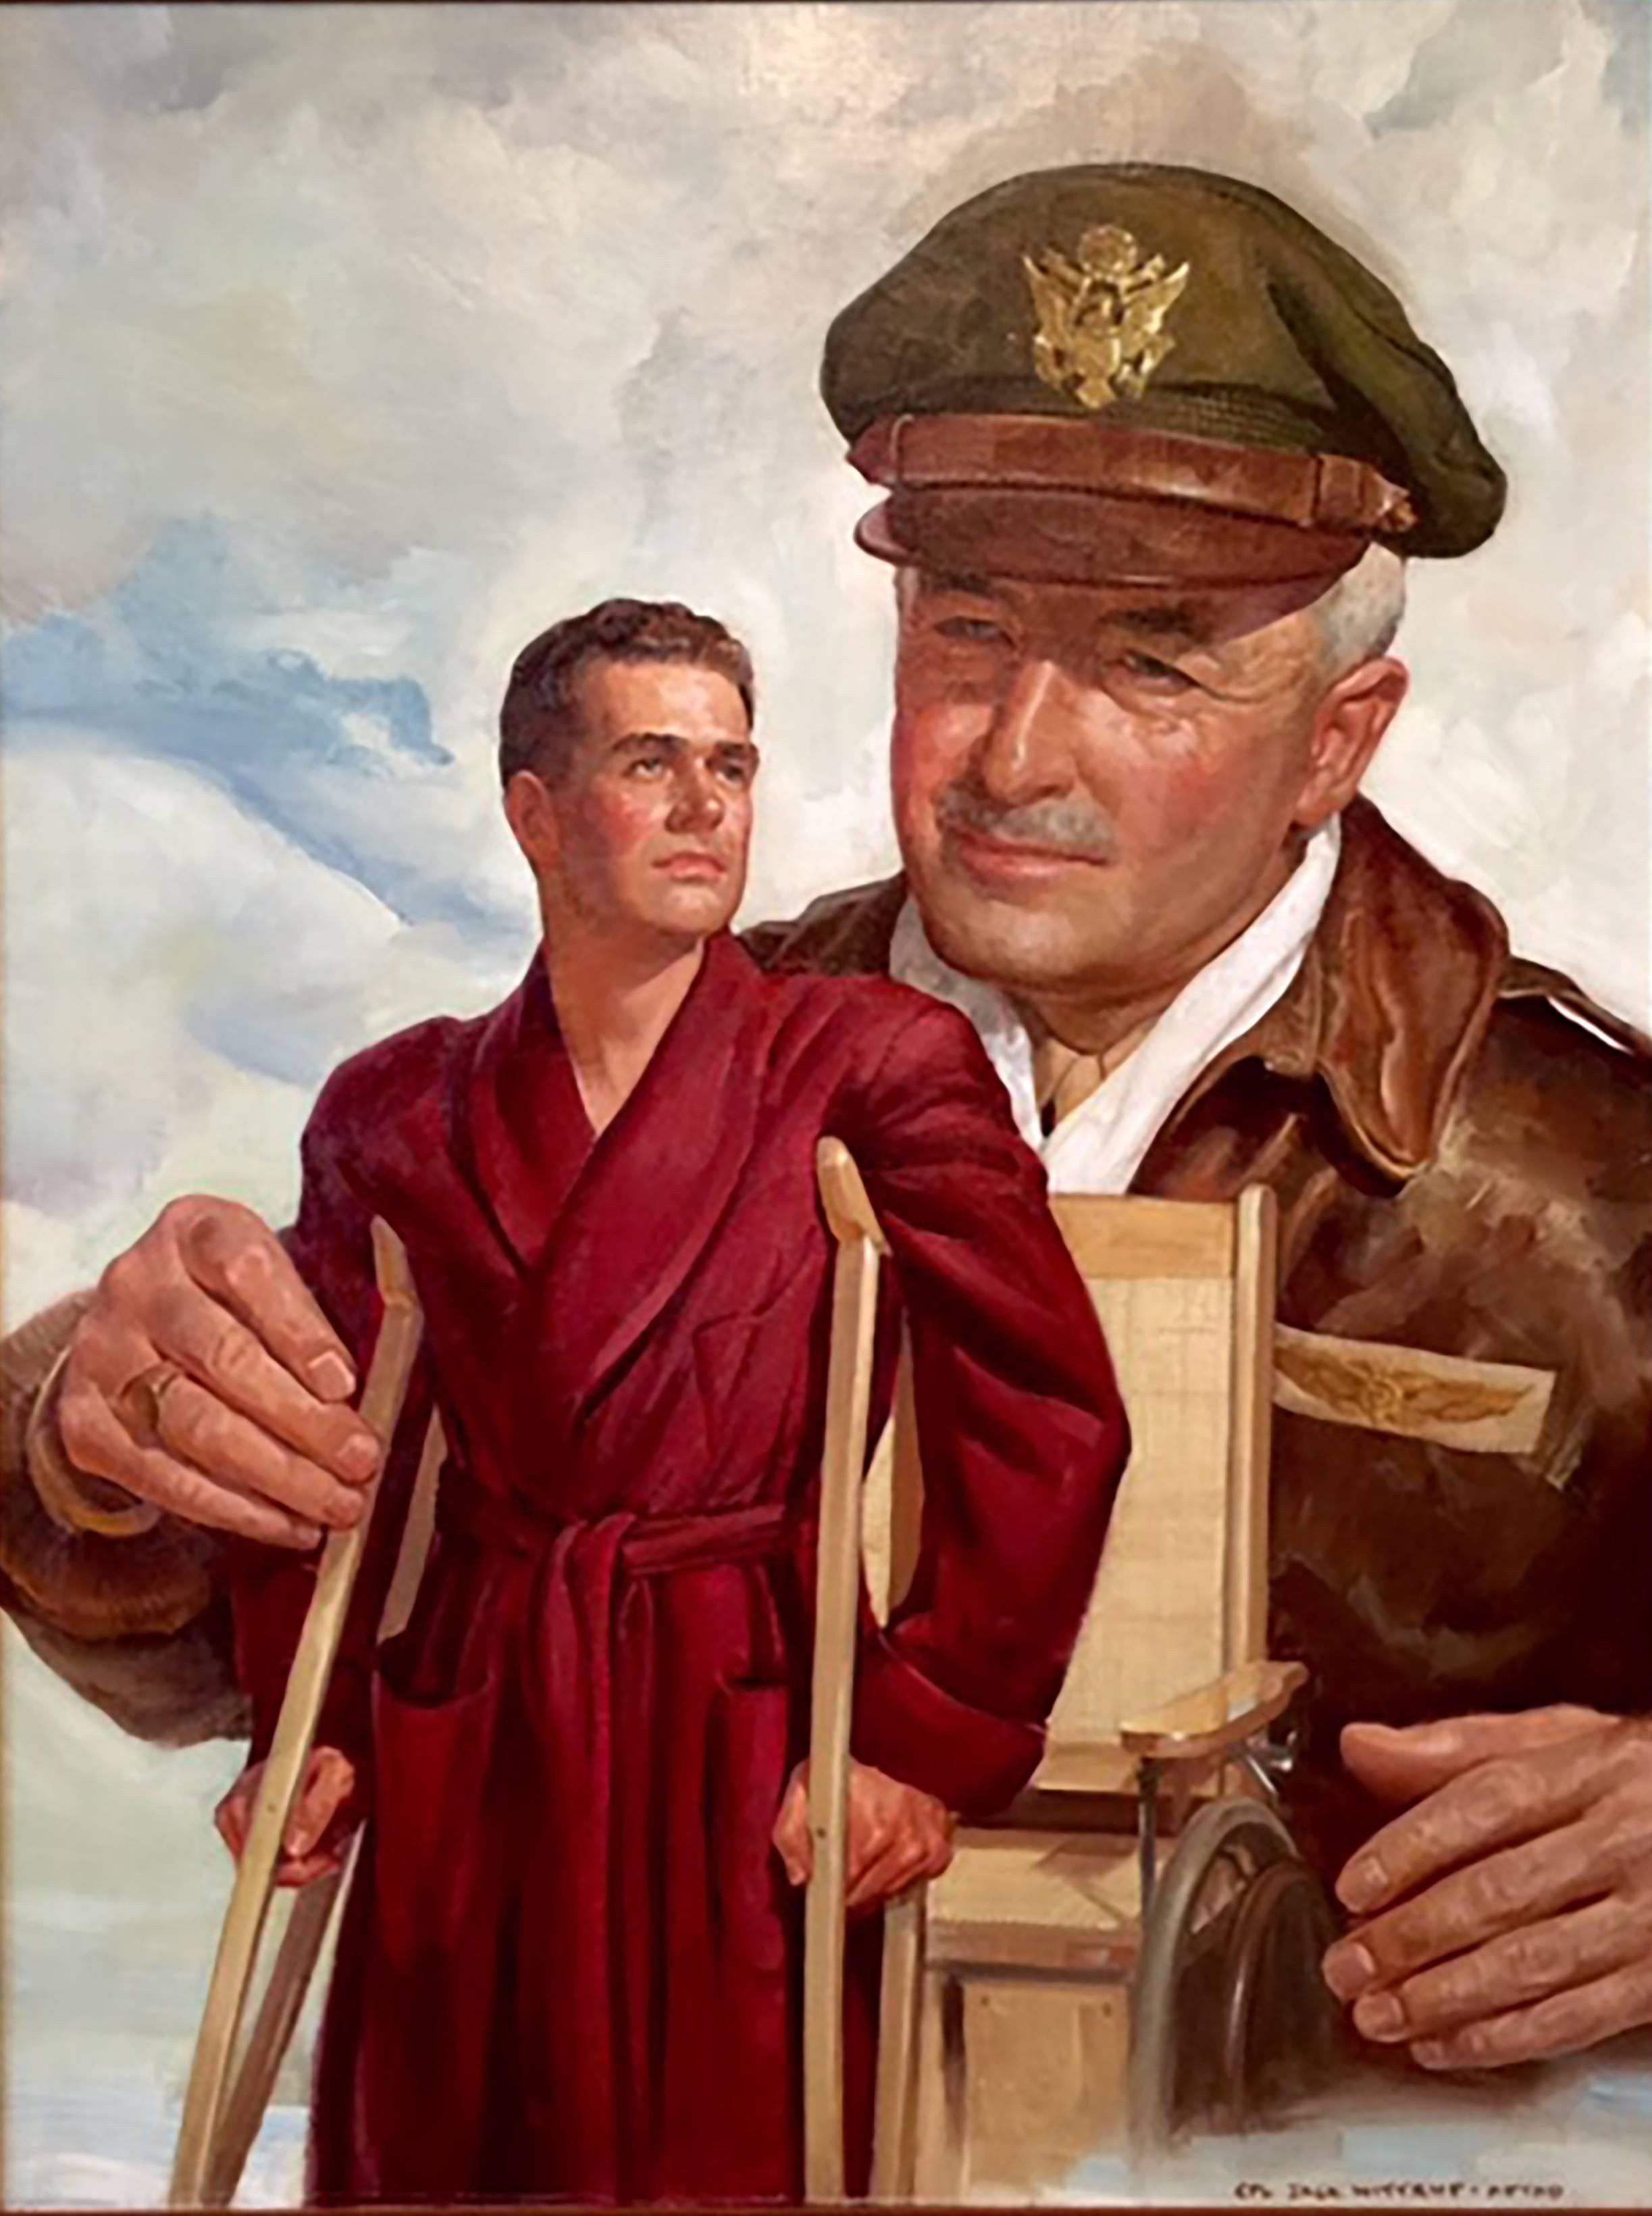 Jack Wittrup Portrait Painting - World War II Propaganda Poster Illustration